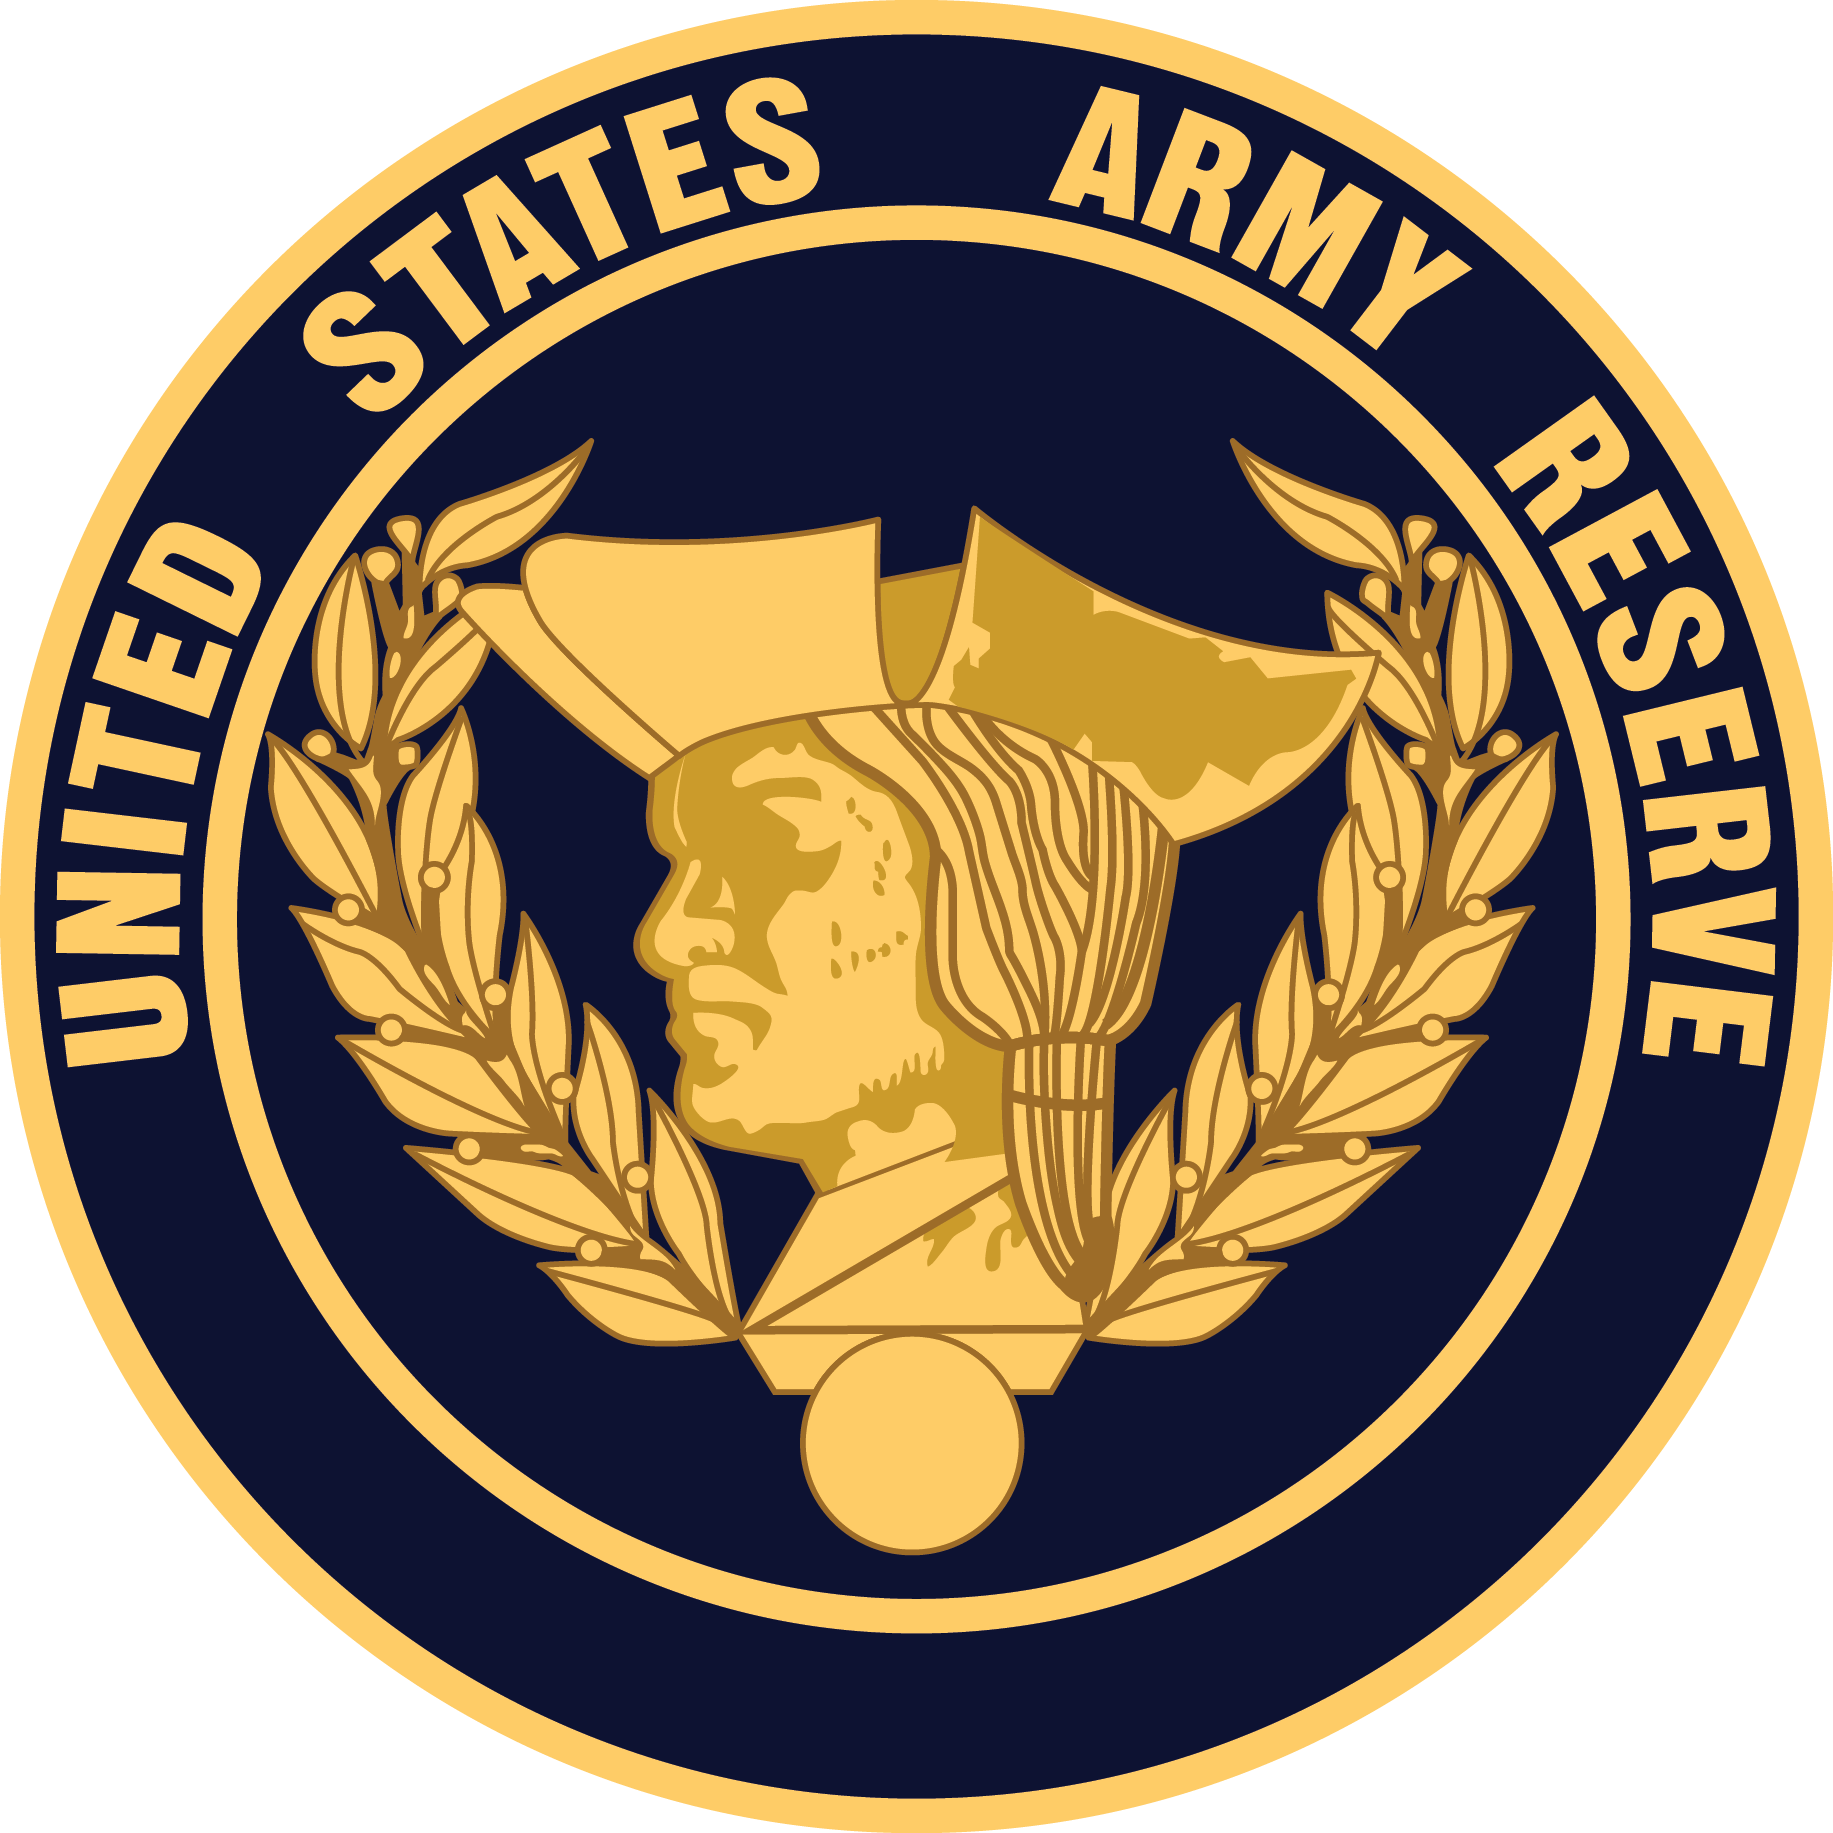 Lhi Army Reserve - Army Military